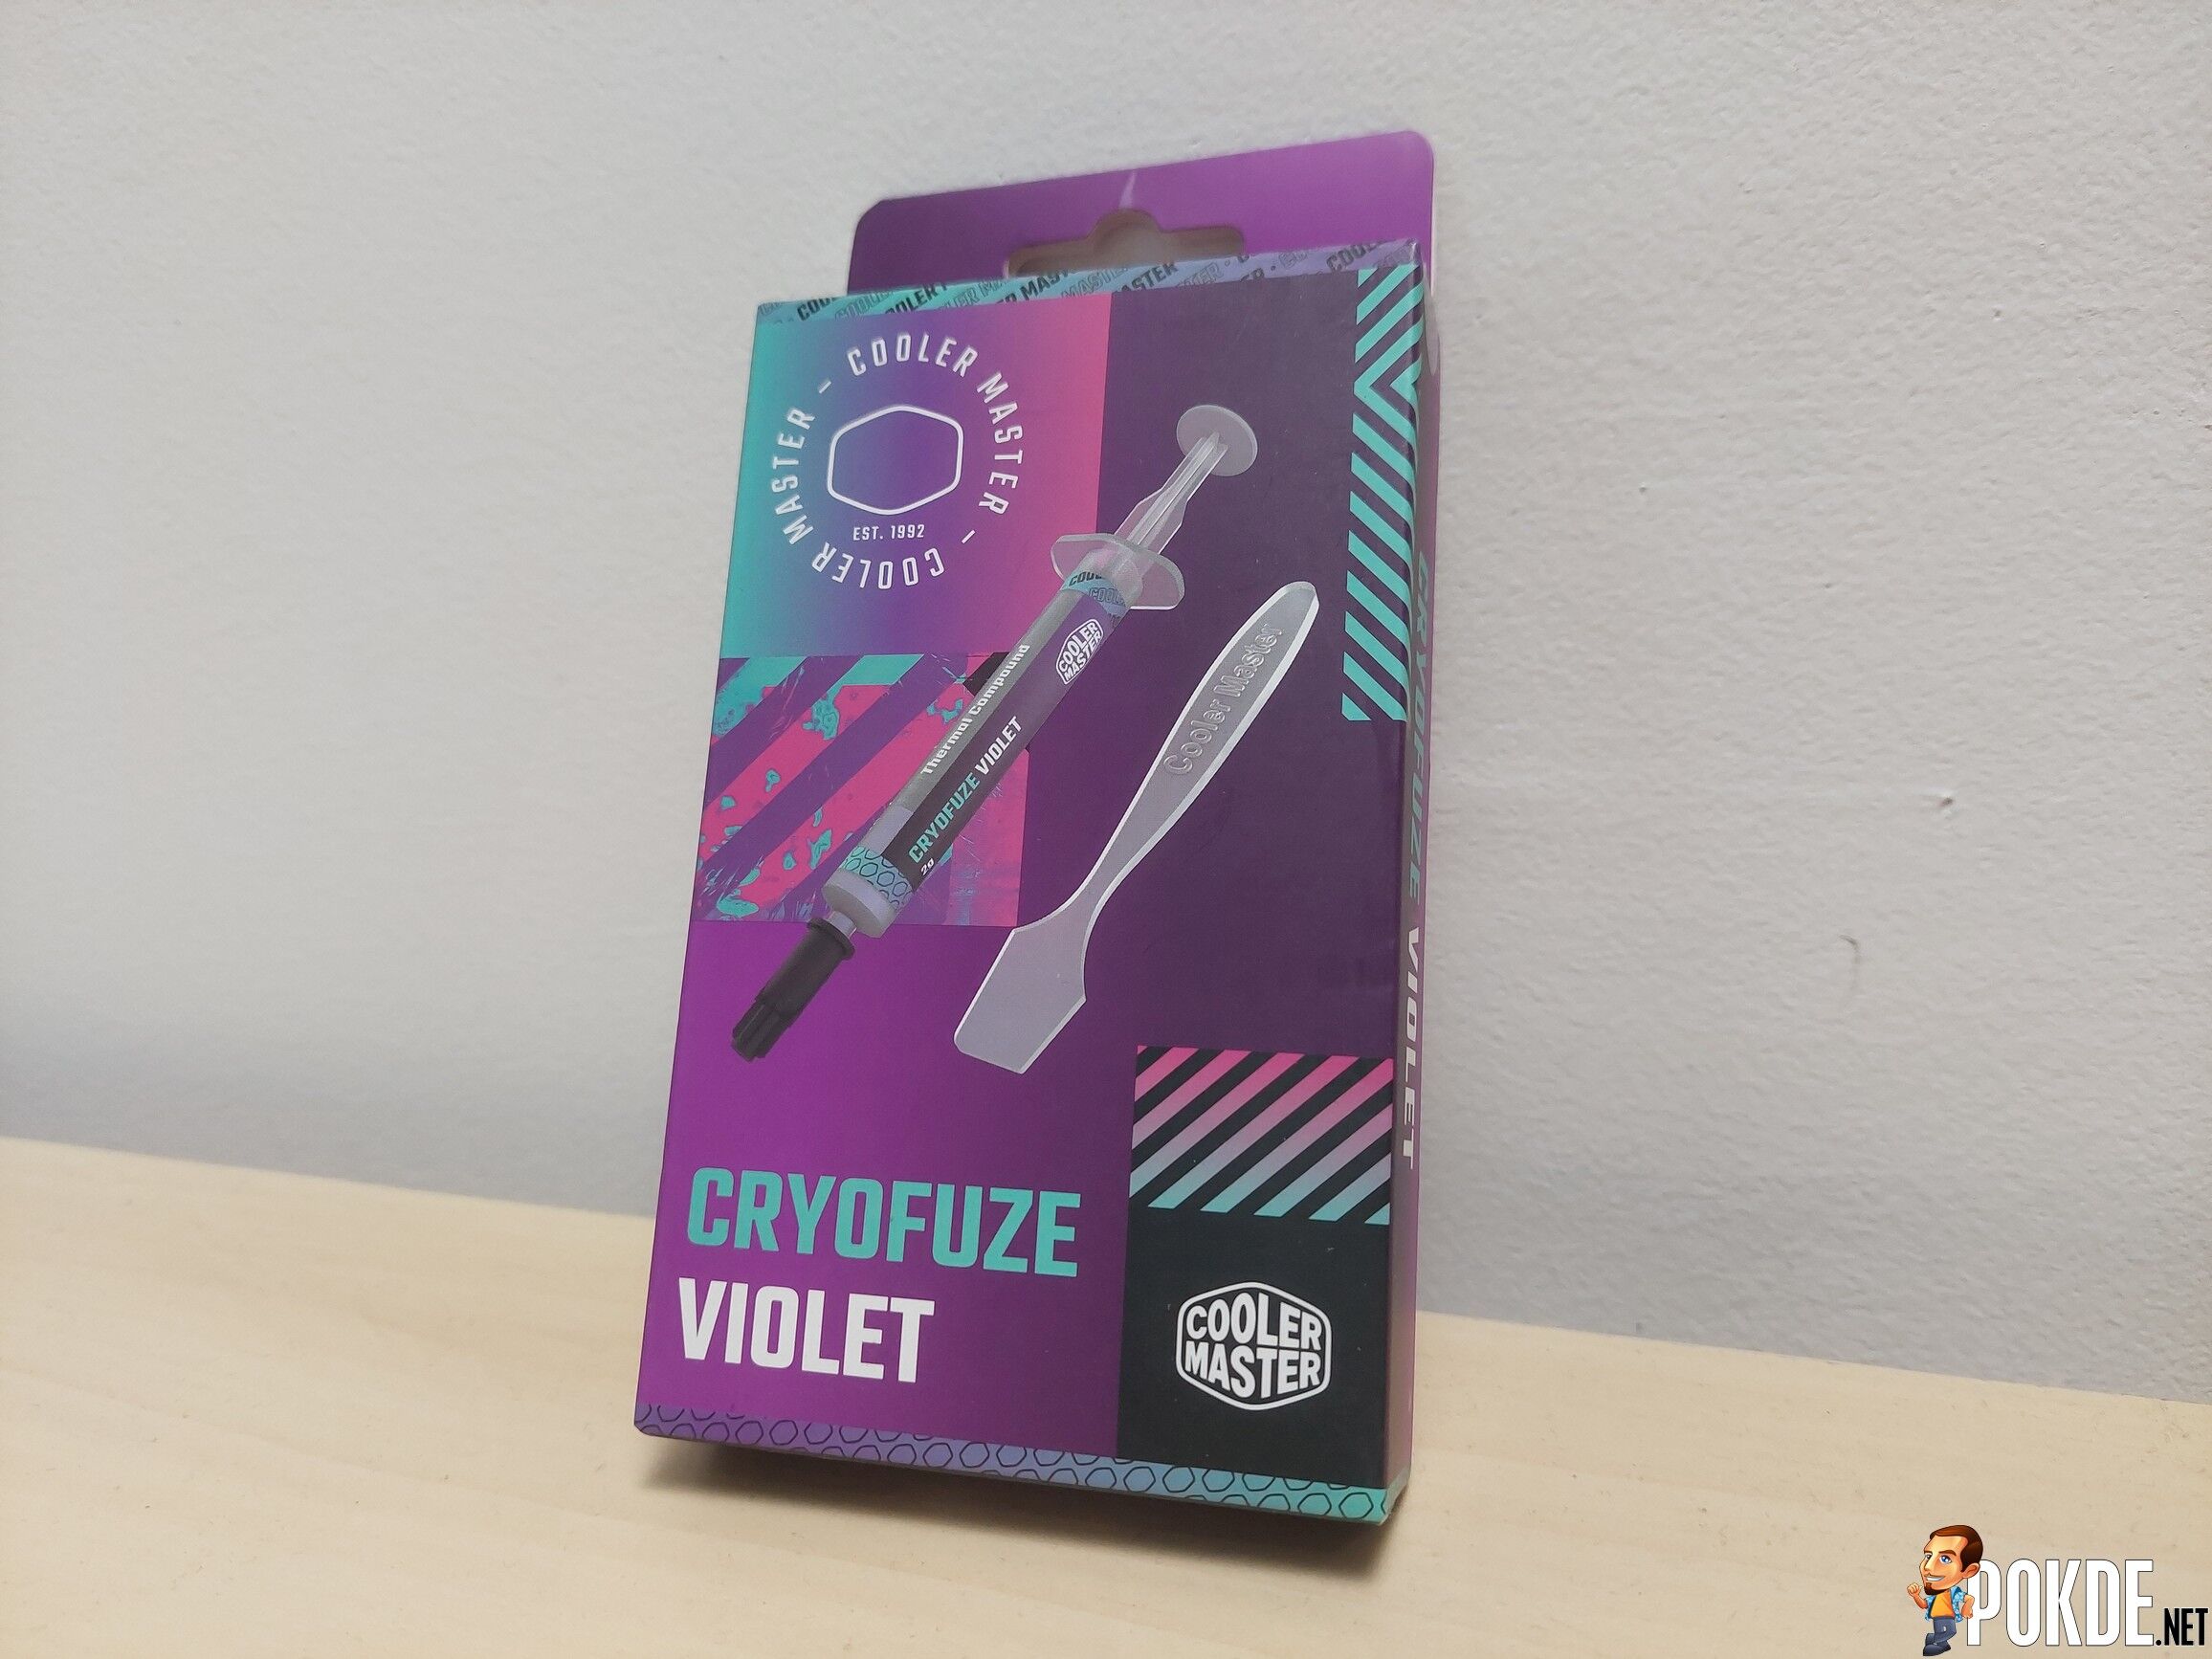 Cooler Master Cryofuze Violet Review